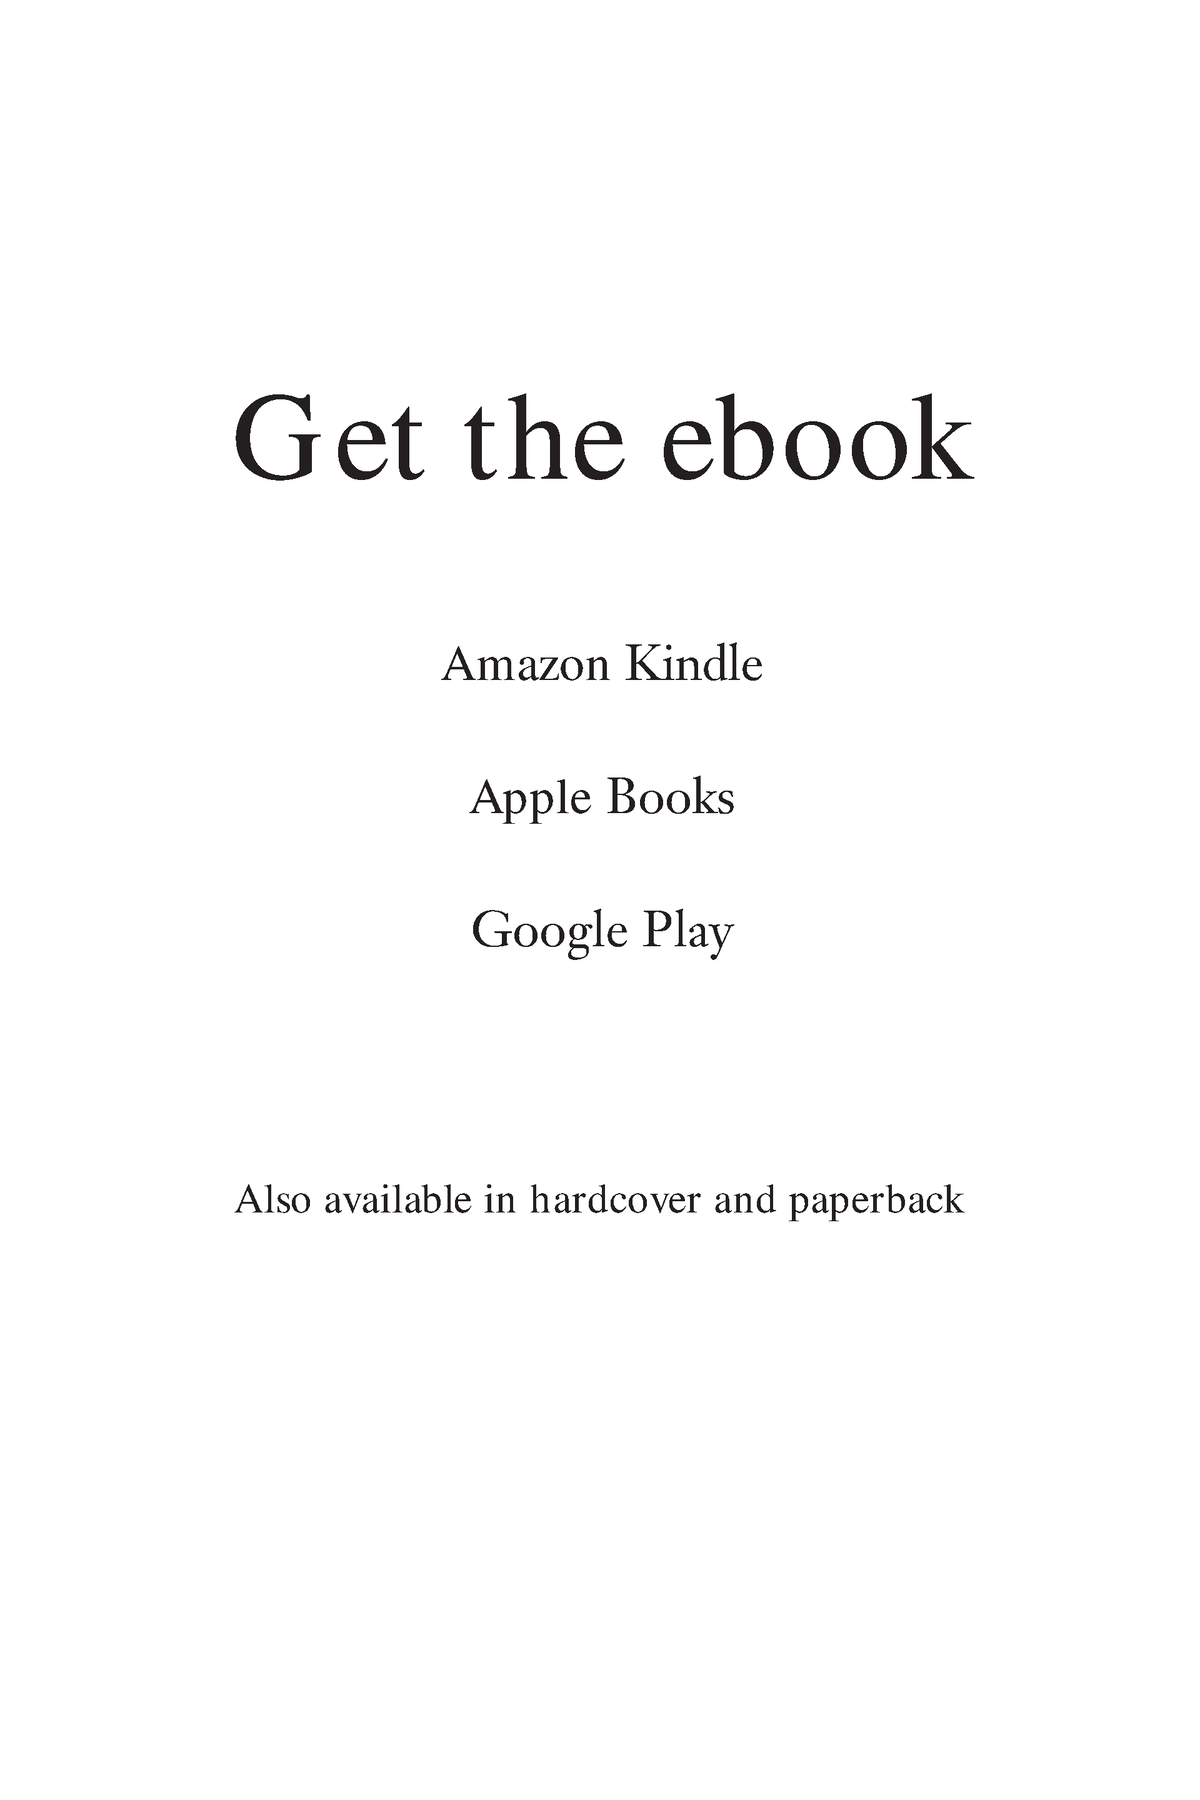 Shiva-samhita - Sample Tutorial work - G et the ebook Amazon Kindle ...